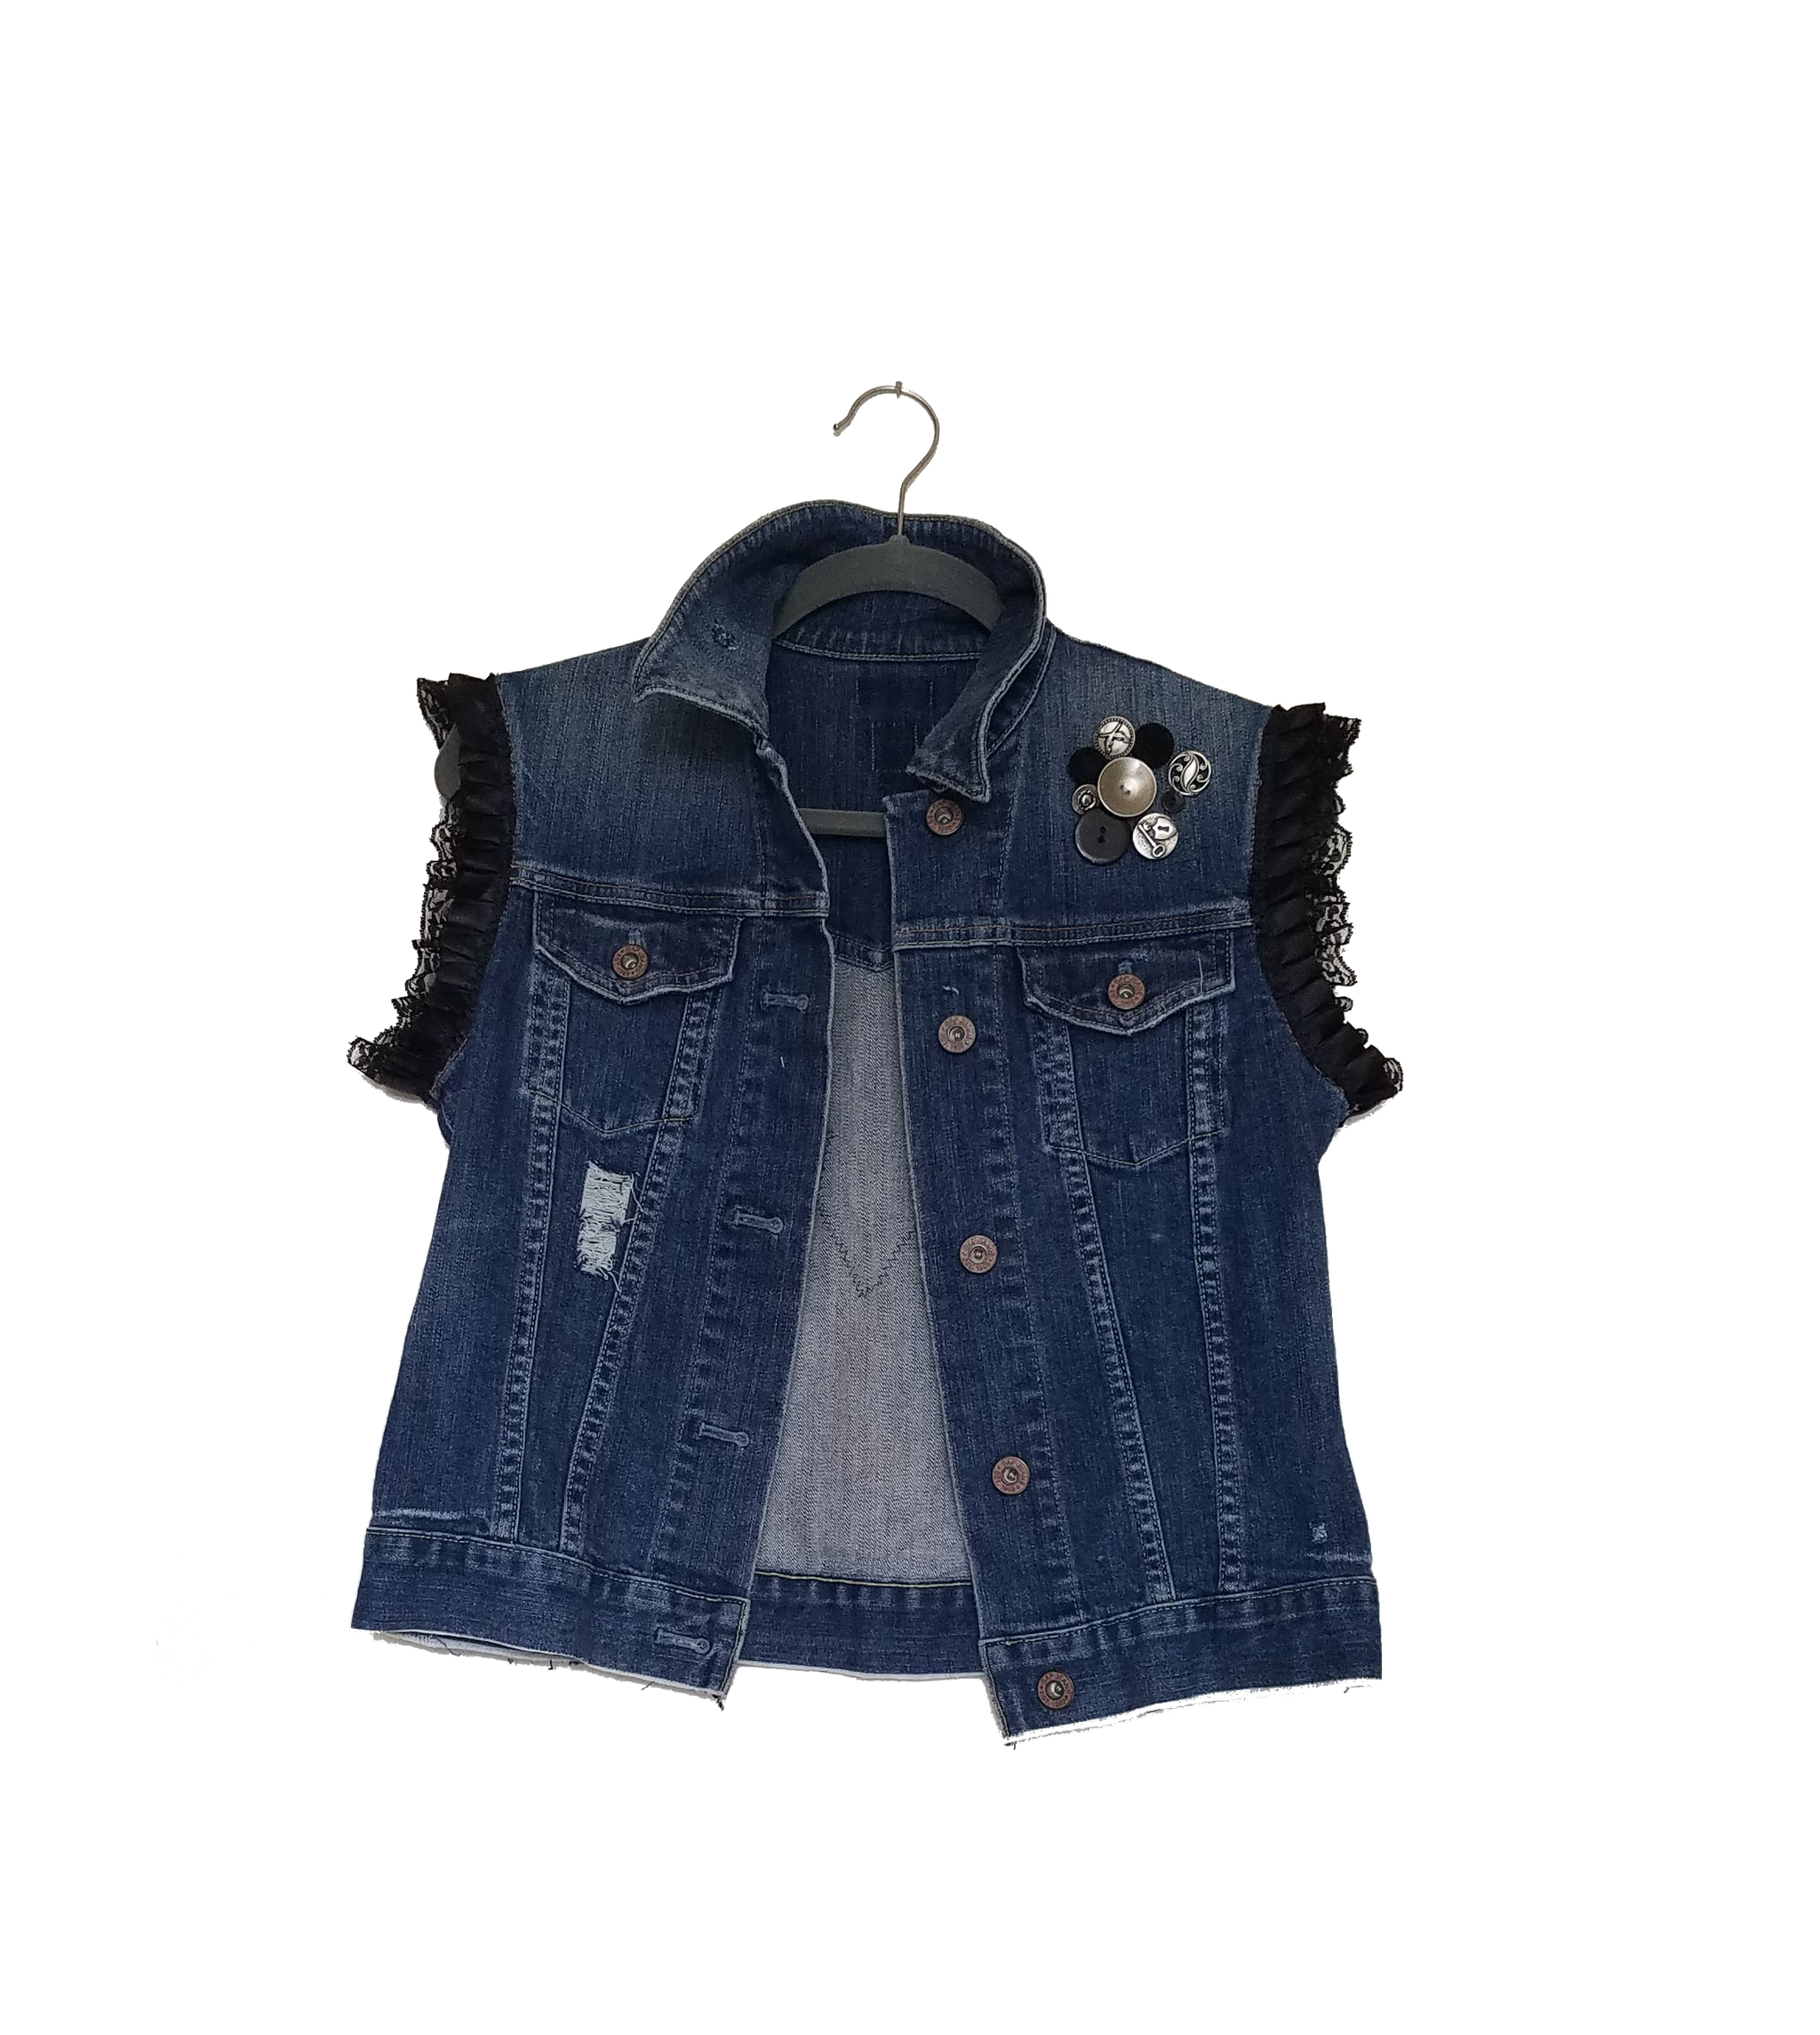 #thejacketproject - Altered Denim Jacket #1